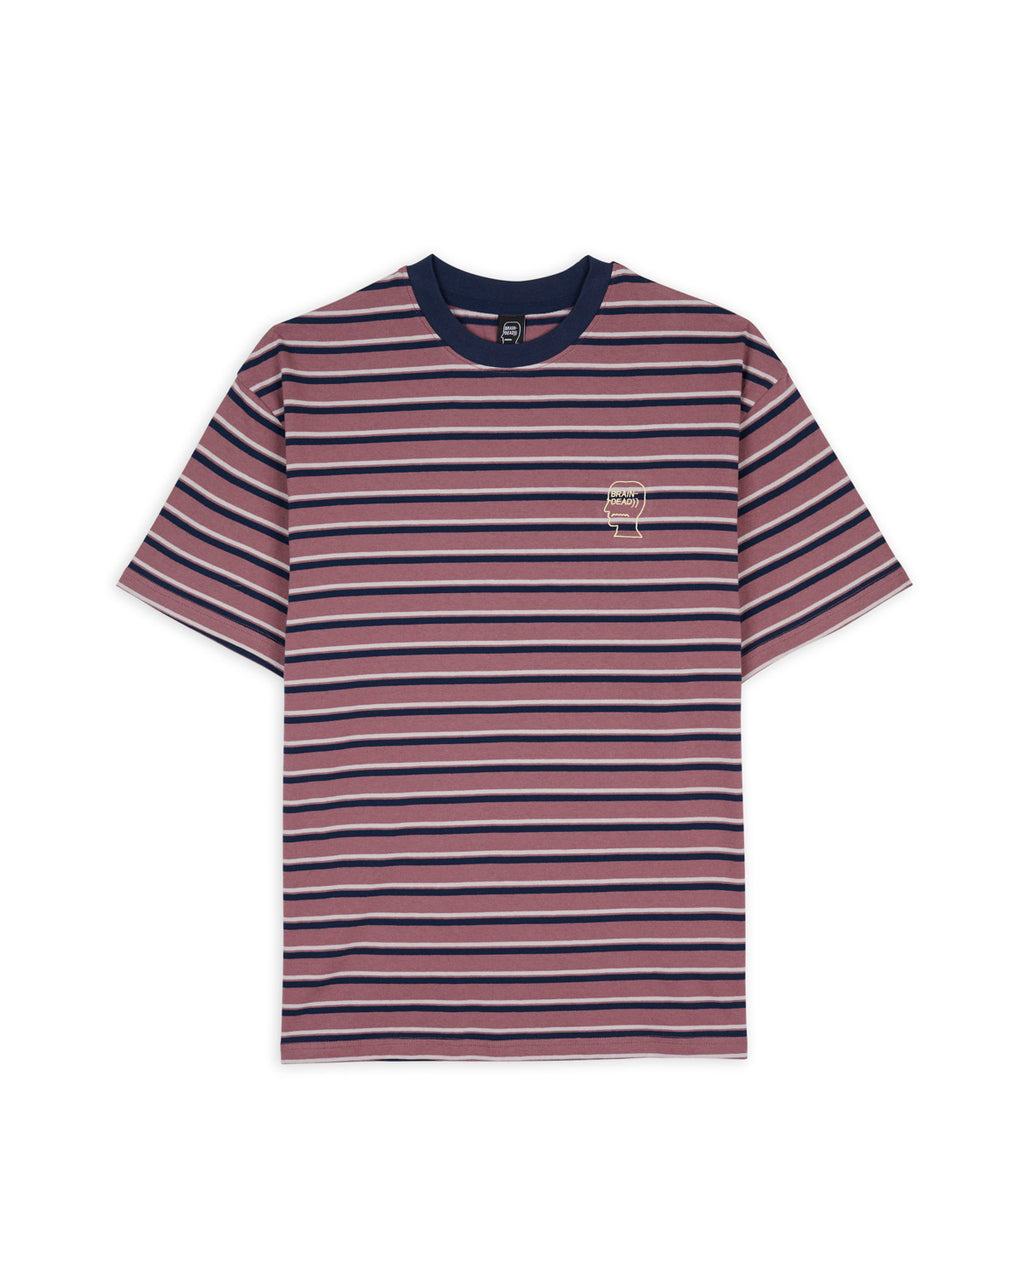 94 Striped T-Shirt - Dusty Rose Multi